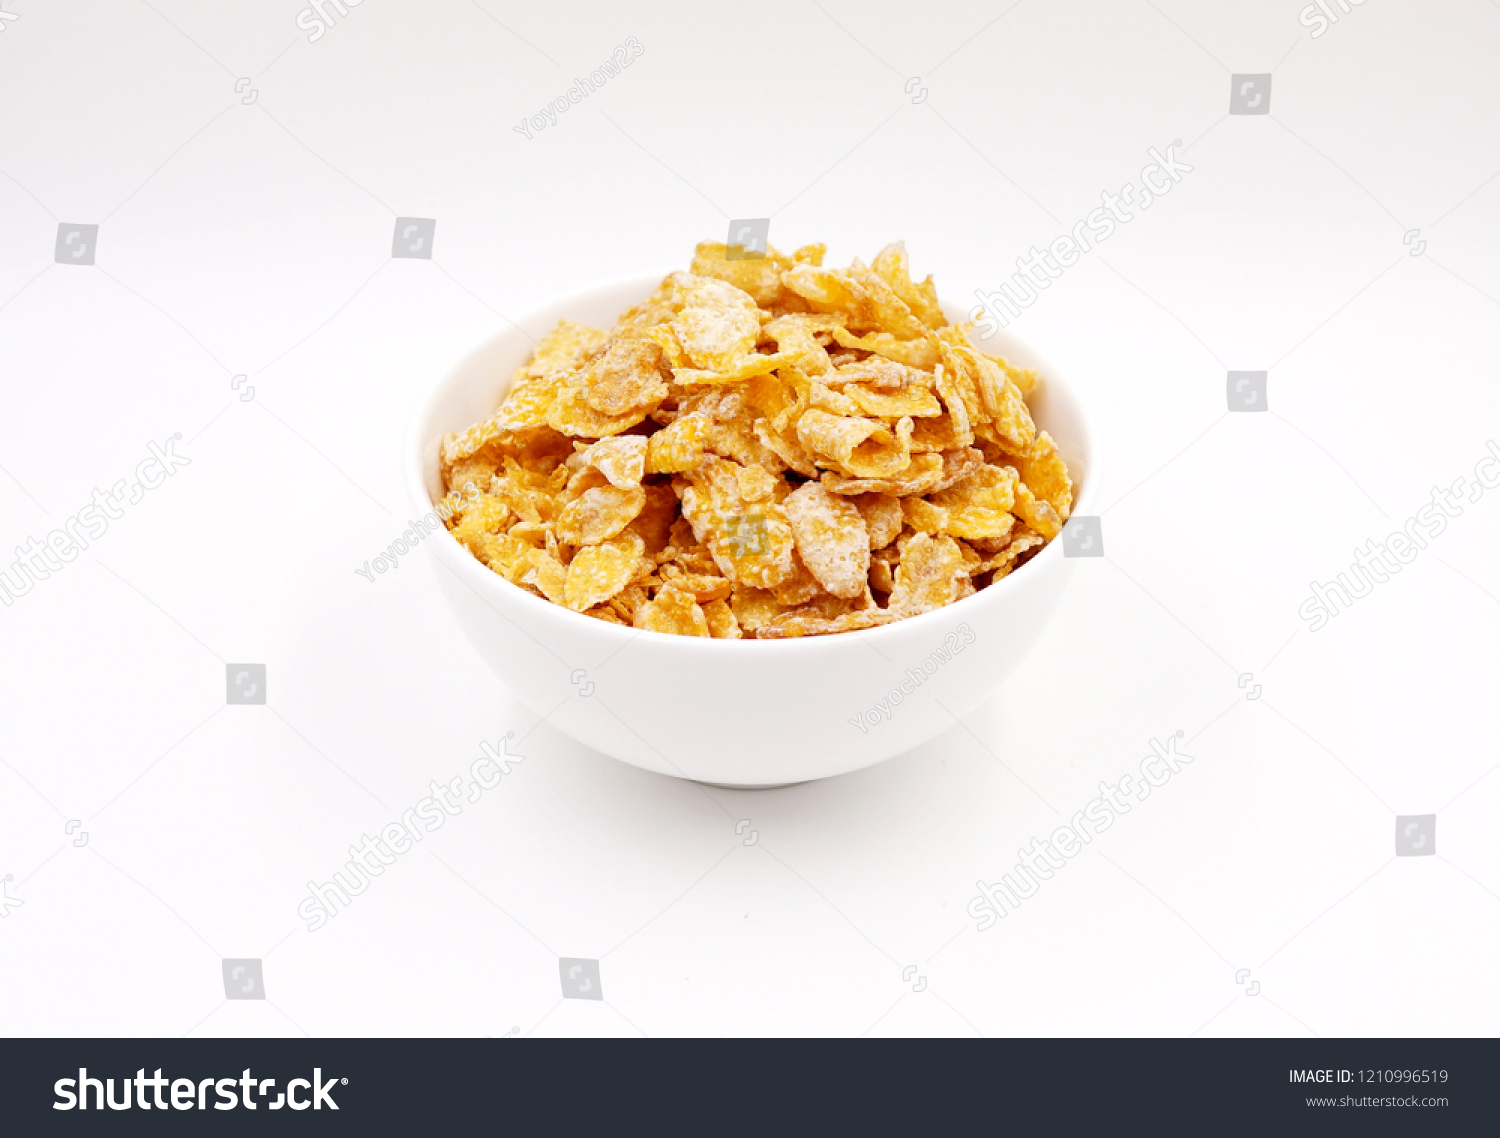 Breakfast cereal - sugar-coated flakes of corn 
 #1210996519